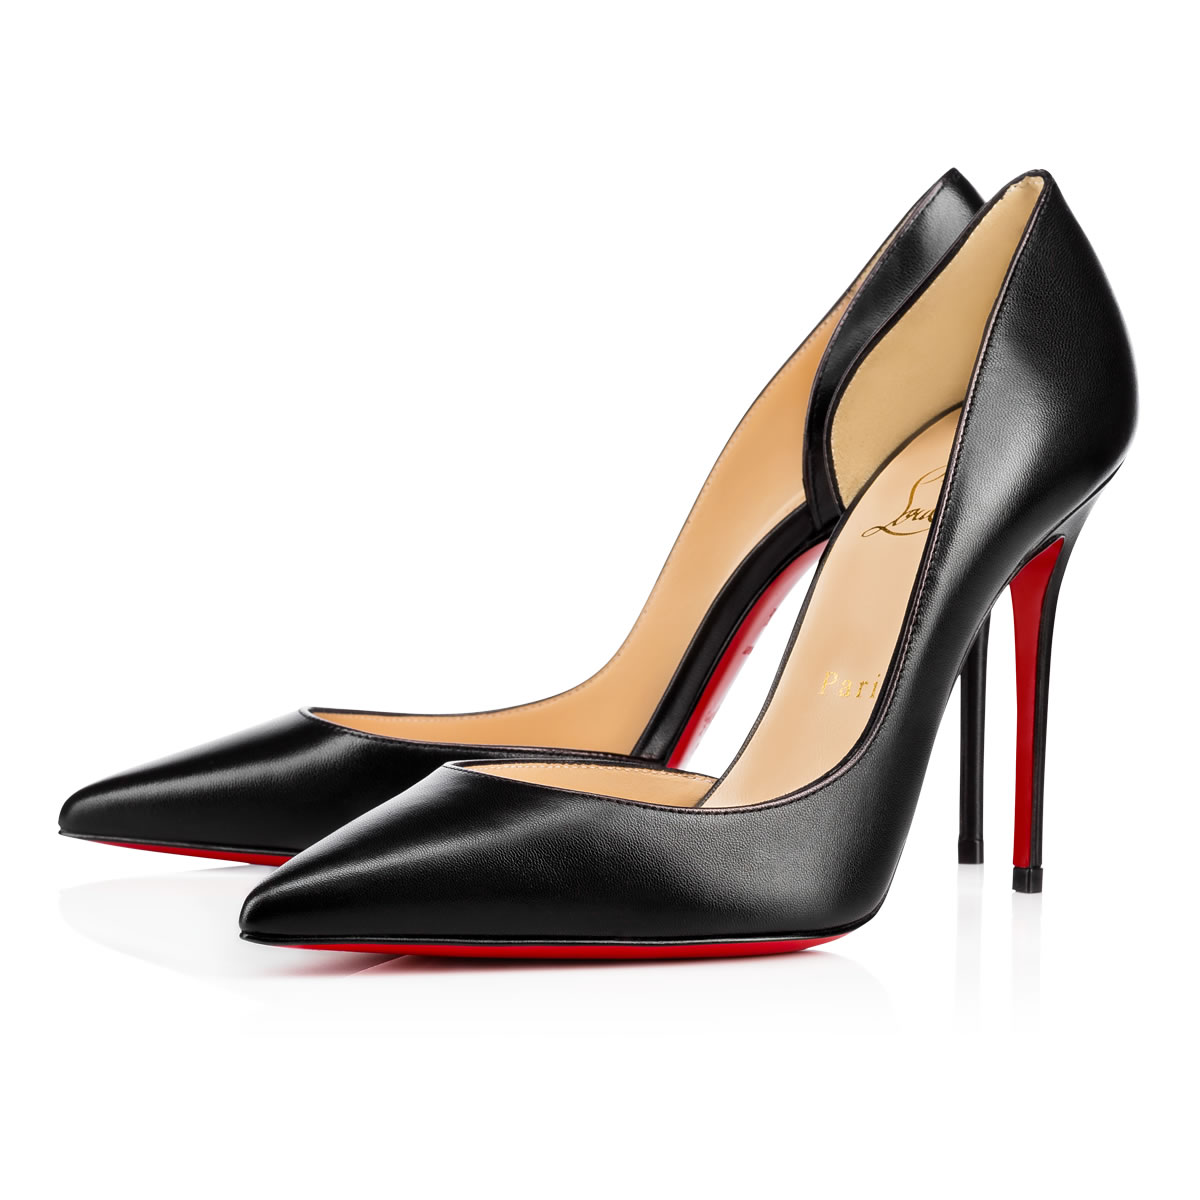 Iriza 100 BLACK Leather - Shoes - Women - Christian Louboutin